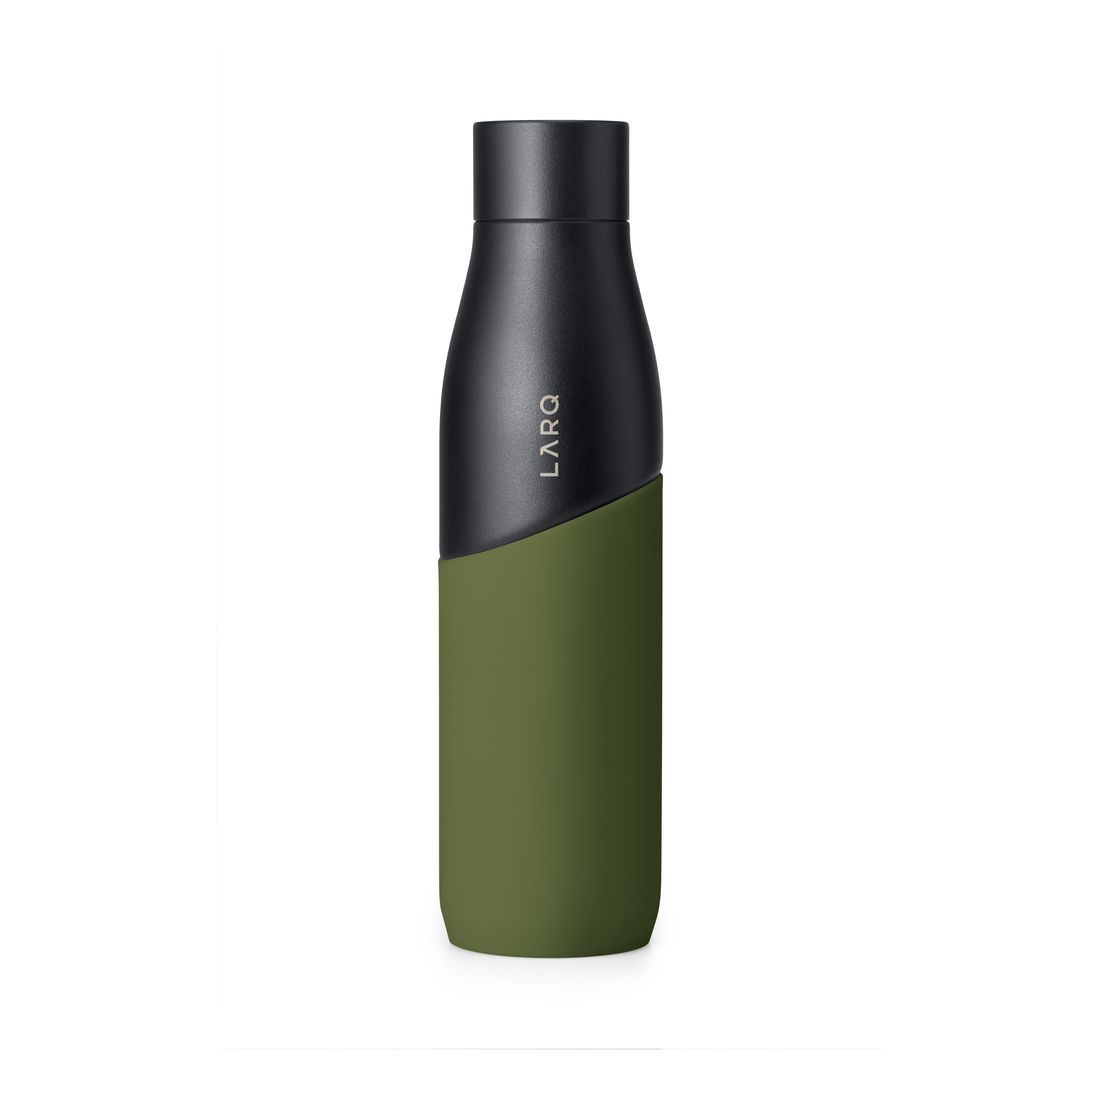 LARQ Bottle PureVis Movement Terra Edition Water Bottle 710ml/24 oz Black/Pine